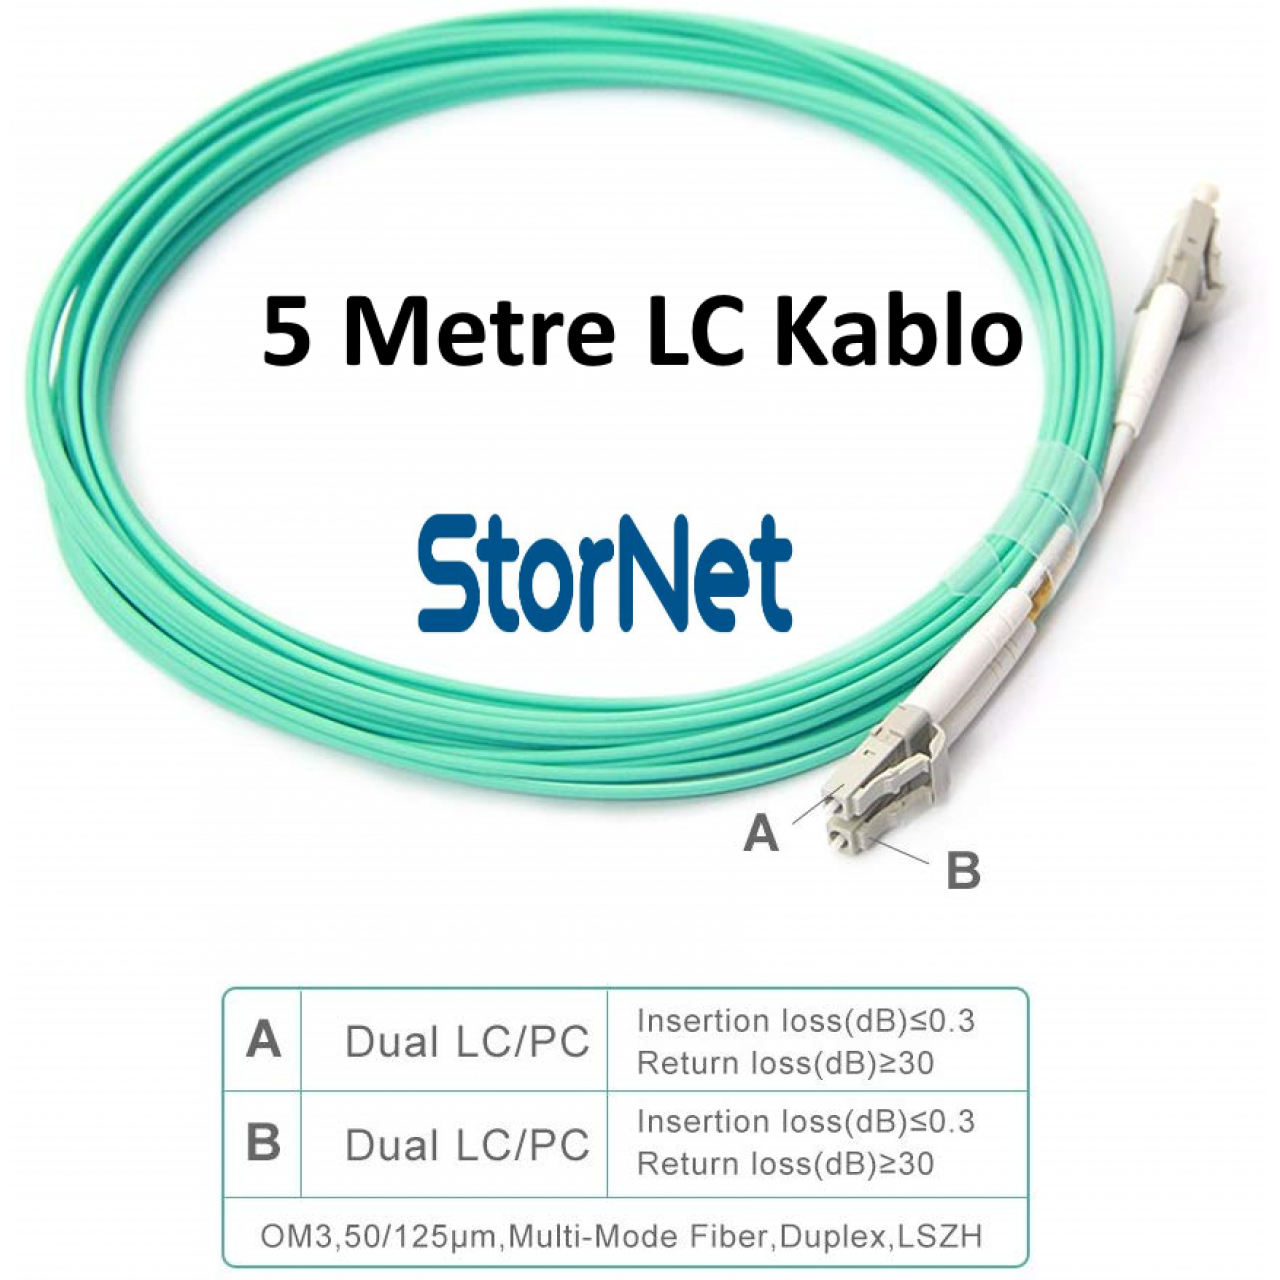 3 Metre LC to LC OM3 10G MM 50/125 Fiber Optic Patch Kablo